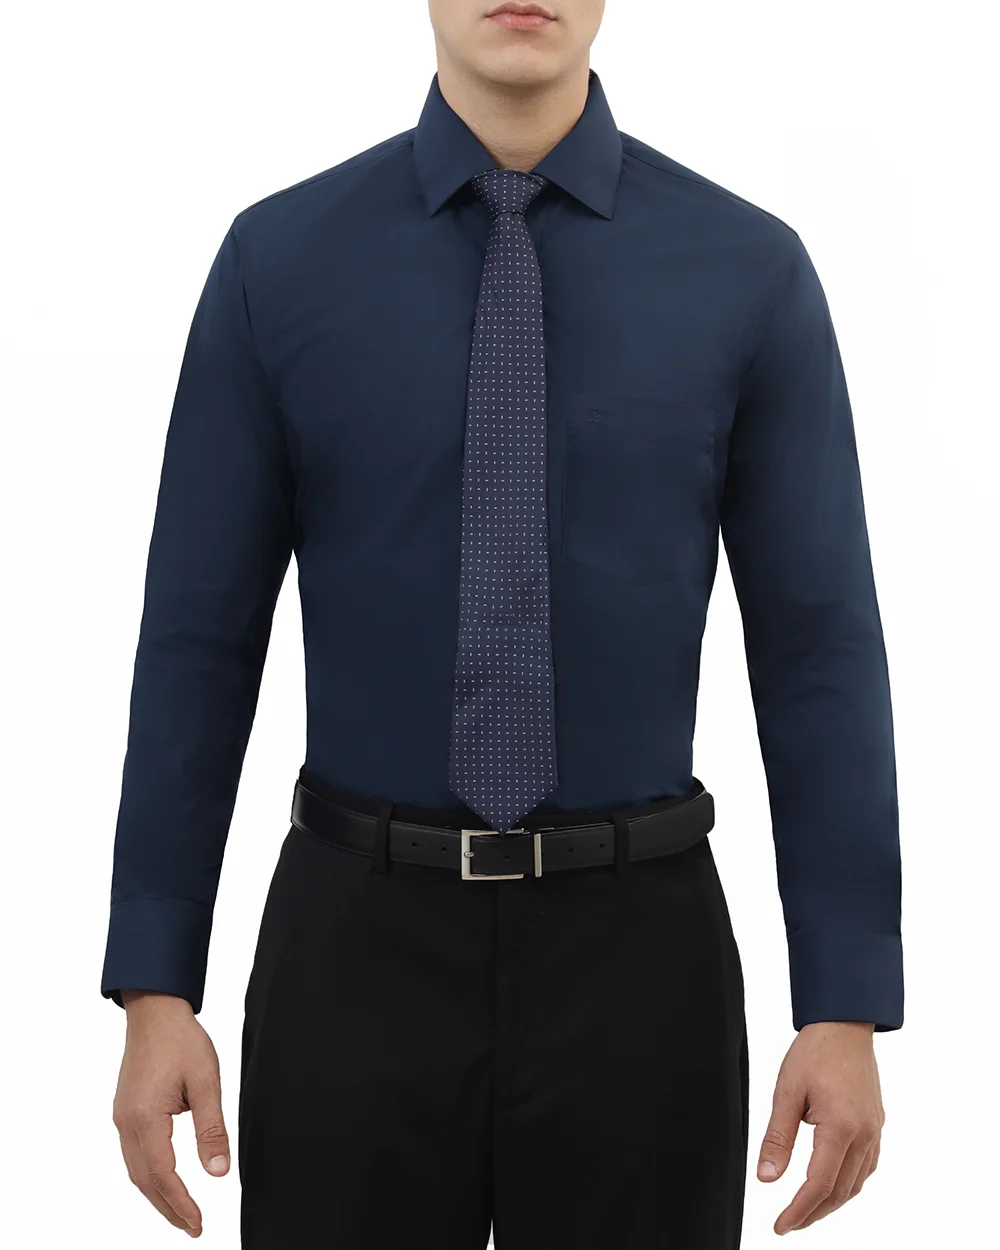 Camisa de vestir lisa slim stretch manga larga color azul navy